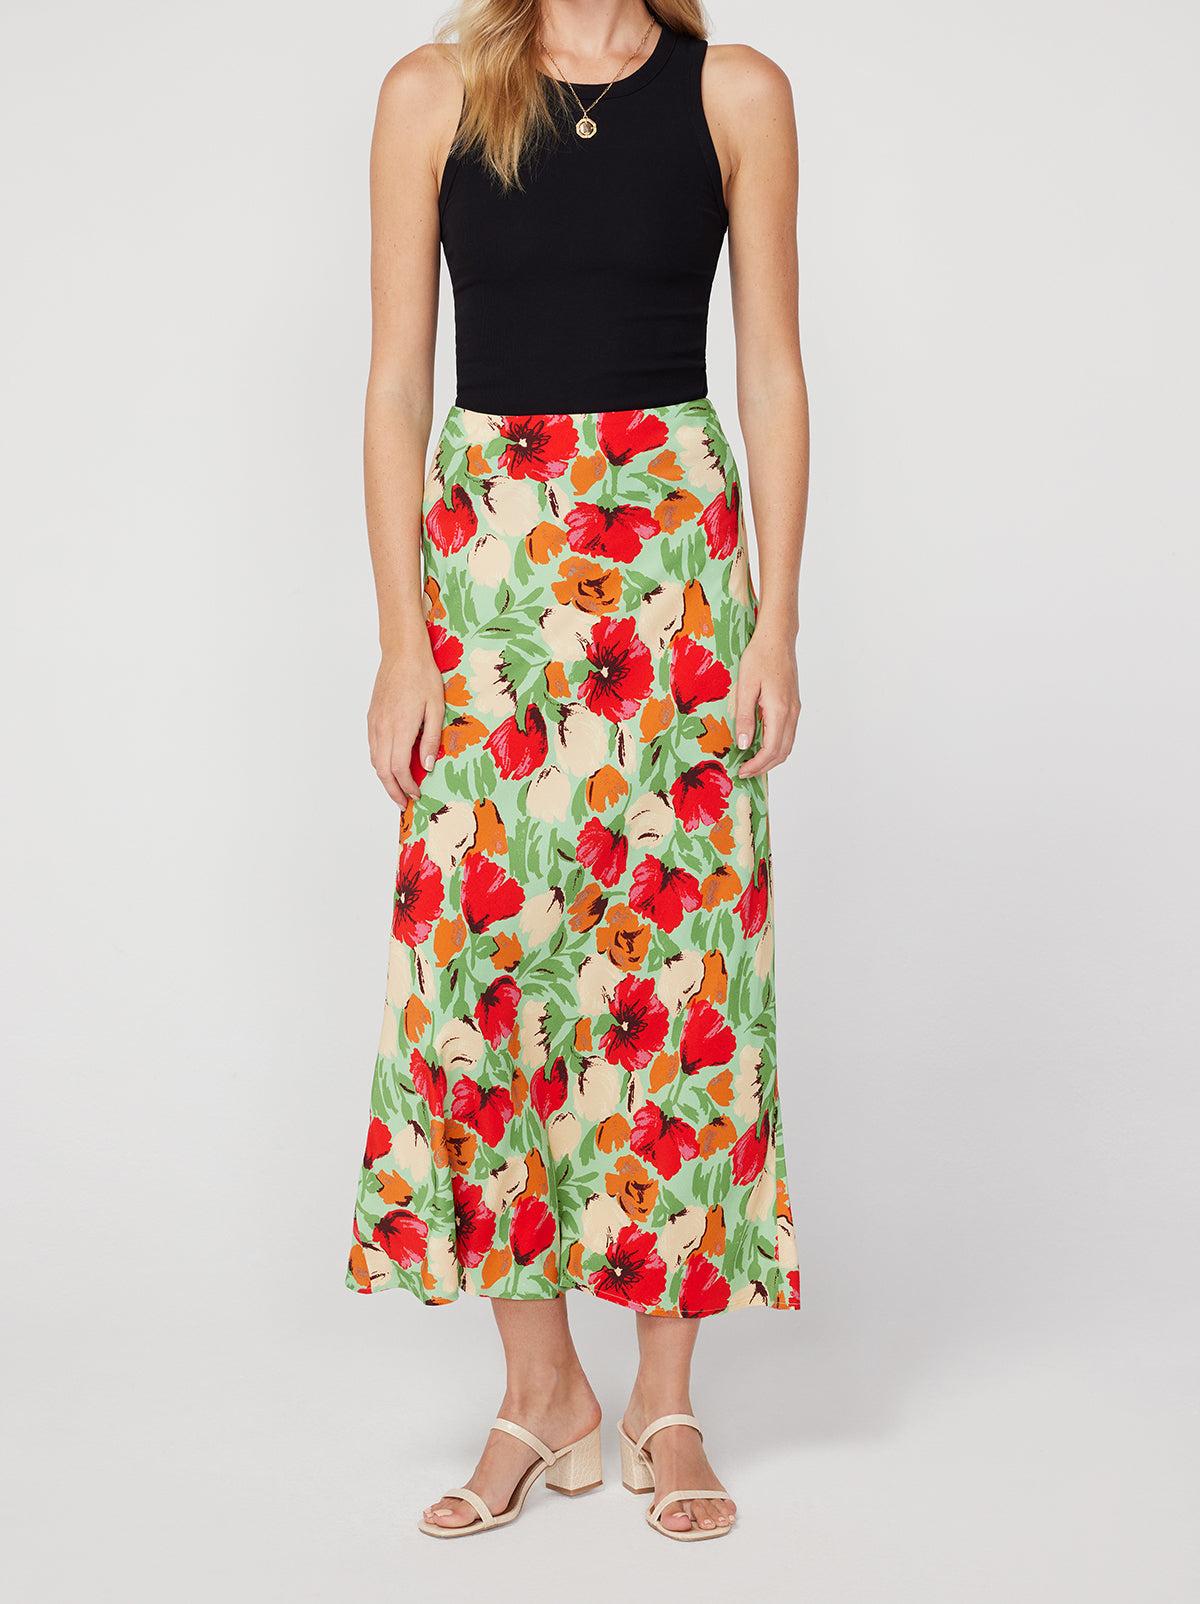 Layla Green Garden Floral Skirt By KITRI Studio